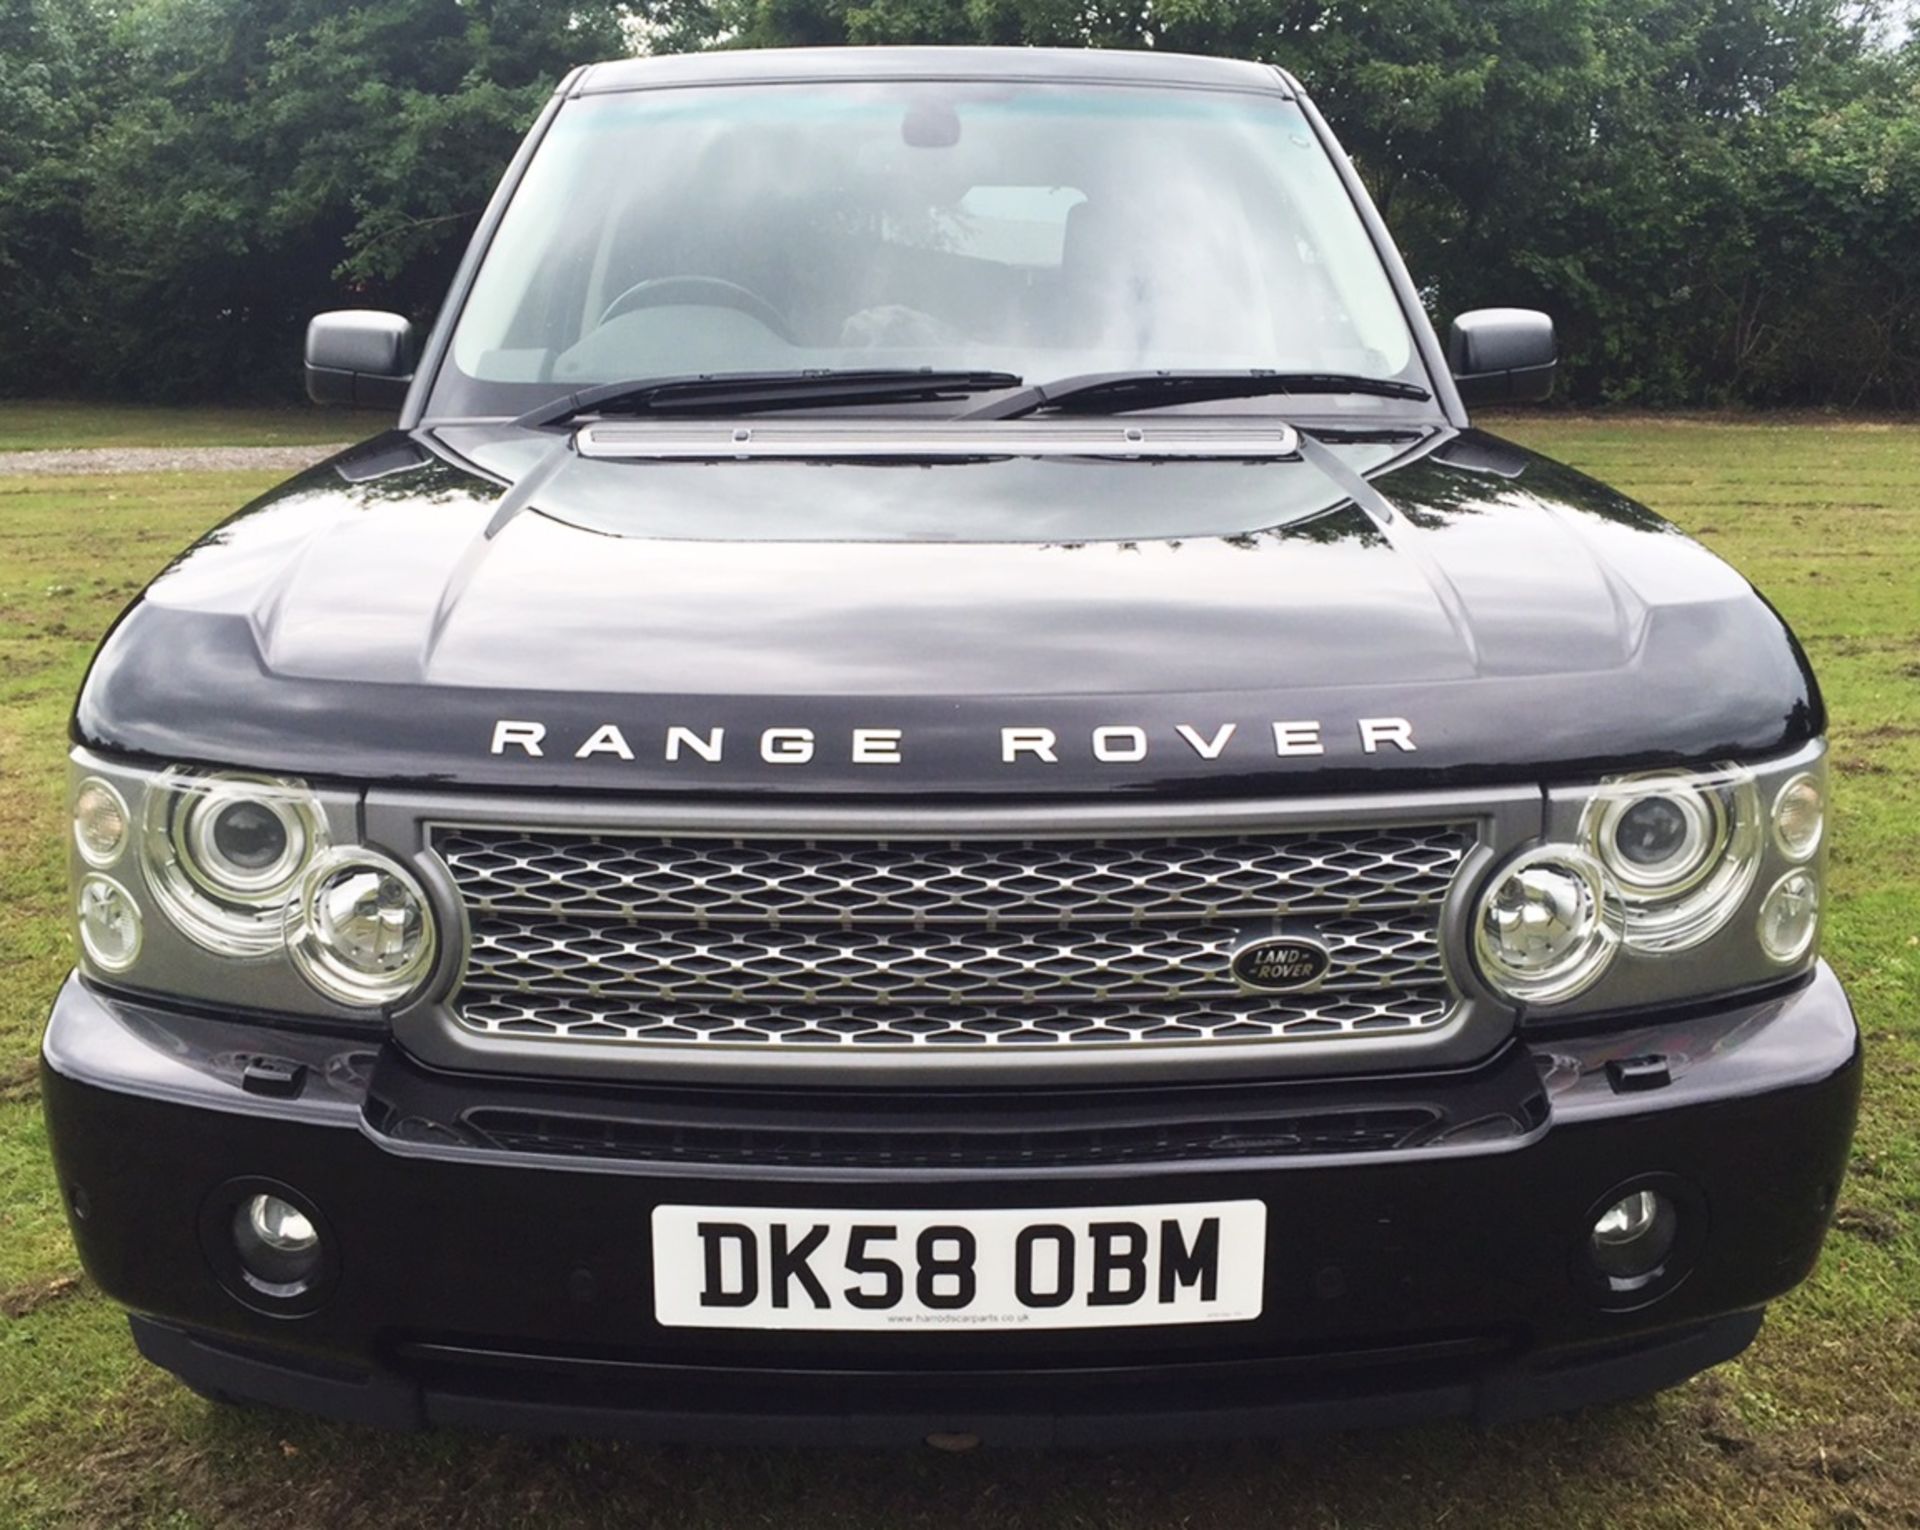 1 x Land Rover Range Rover Autobiography TDV8 A 3.6 Estate - 2008 58 Plate - 109,000 Miles - Black - Image 2 of 27